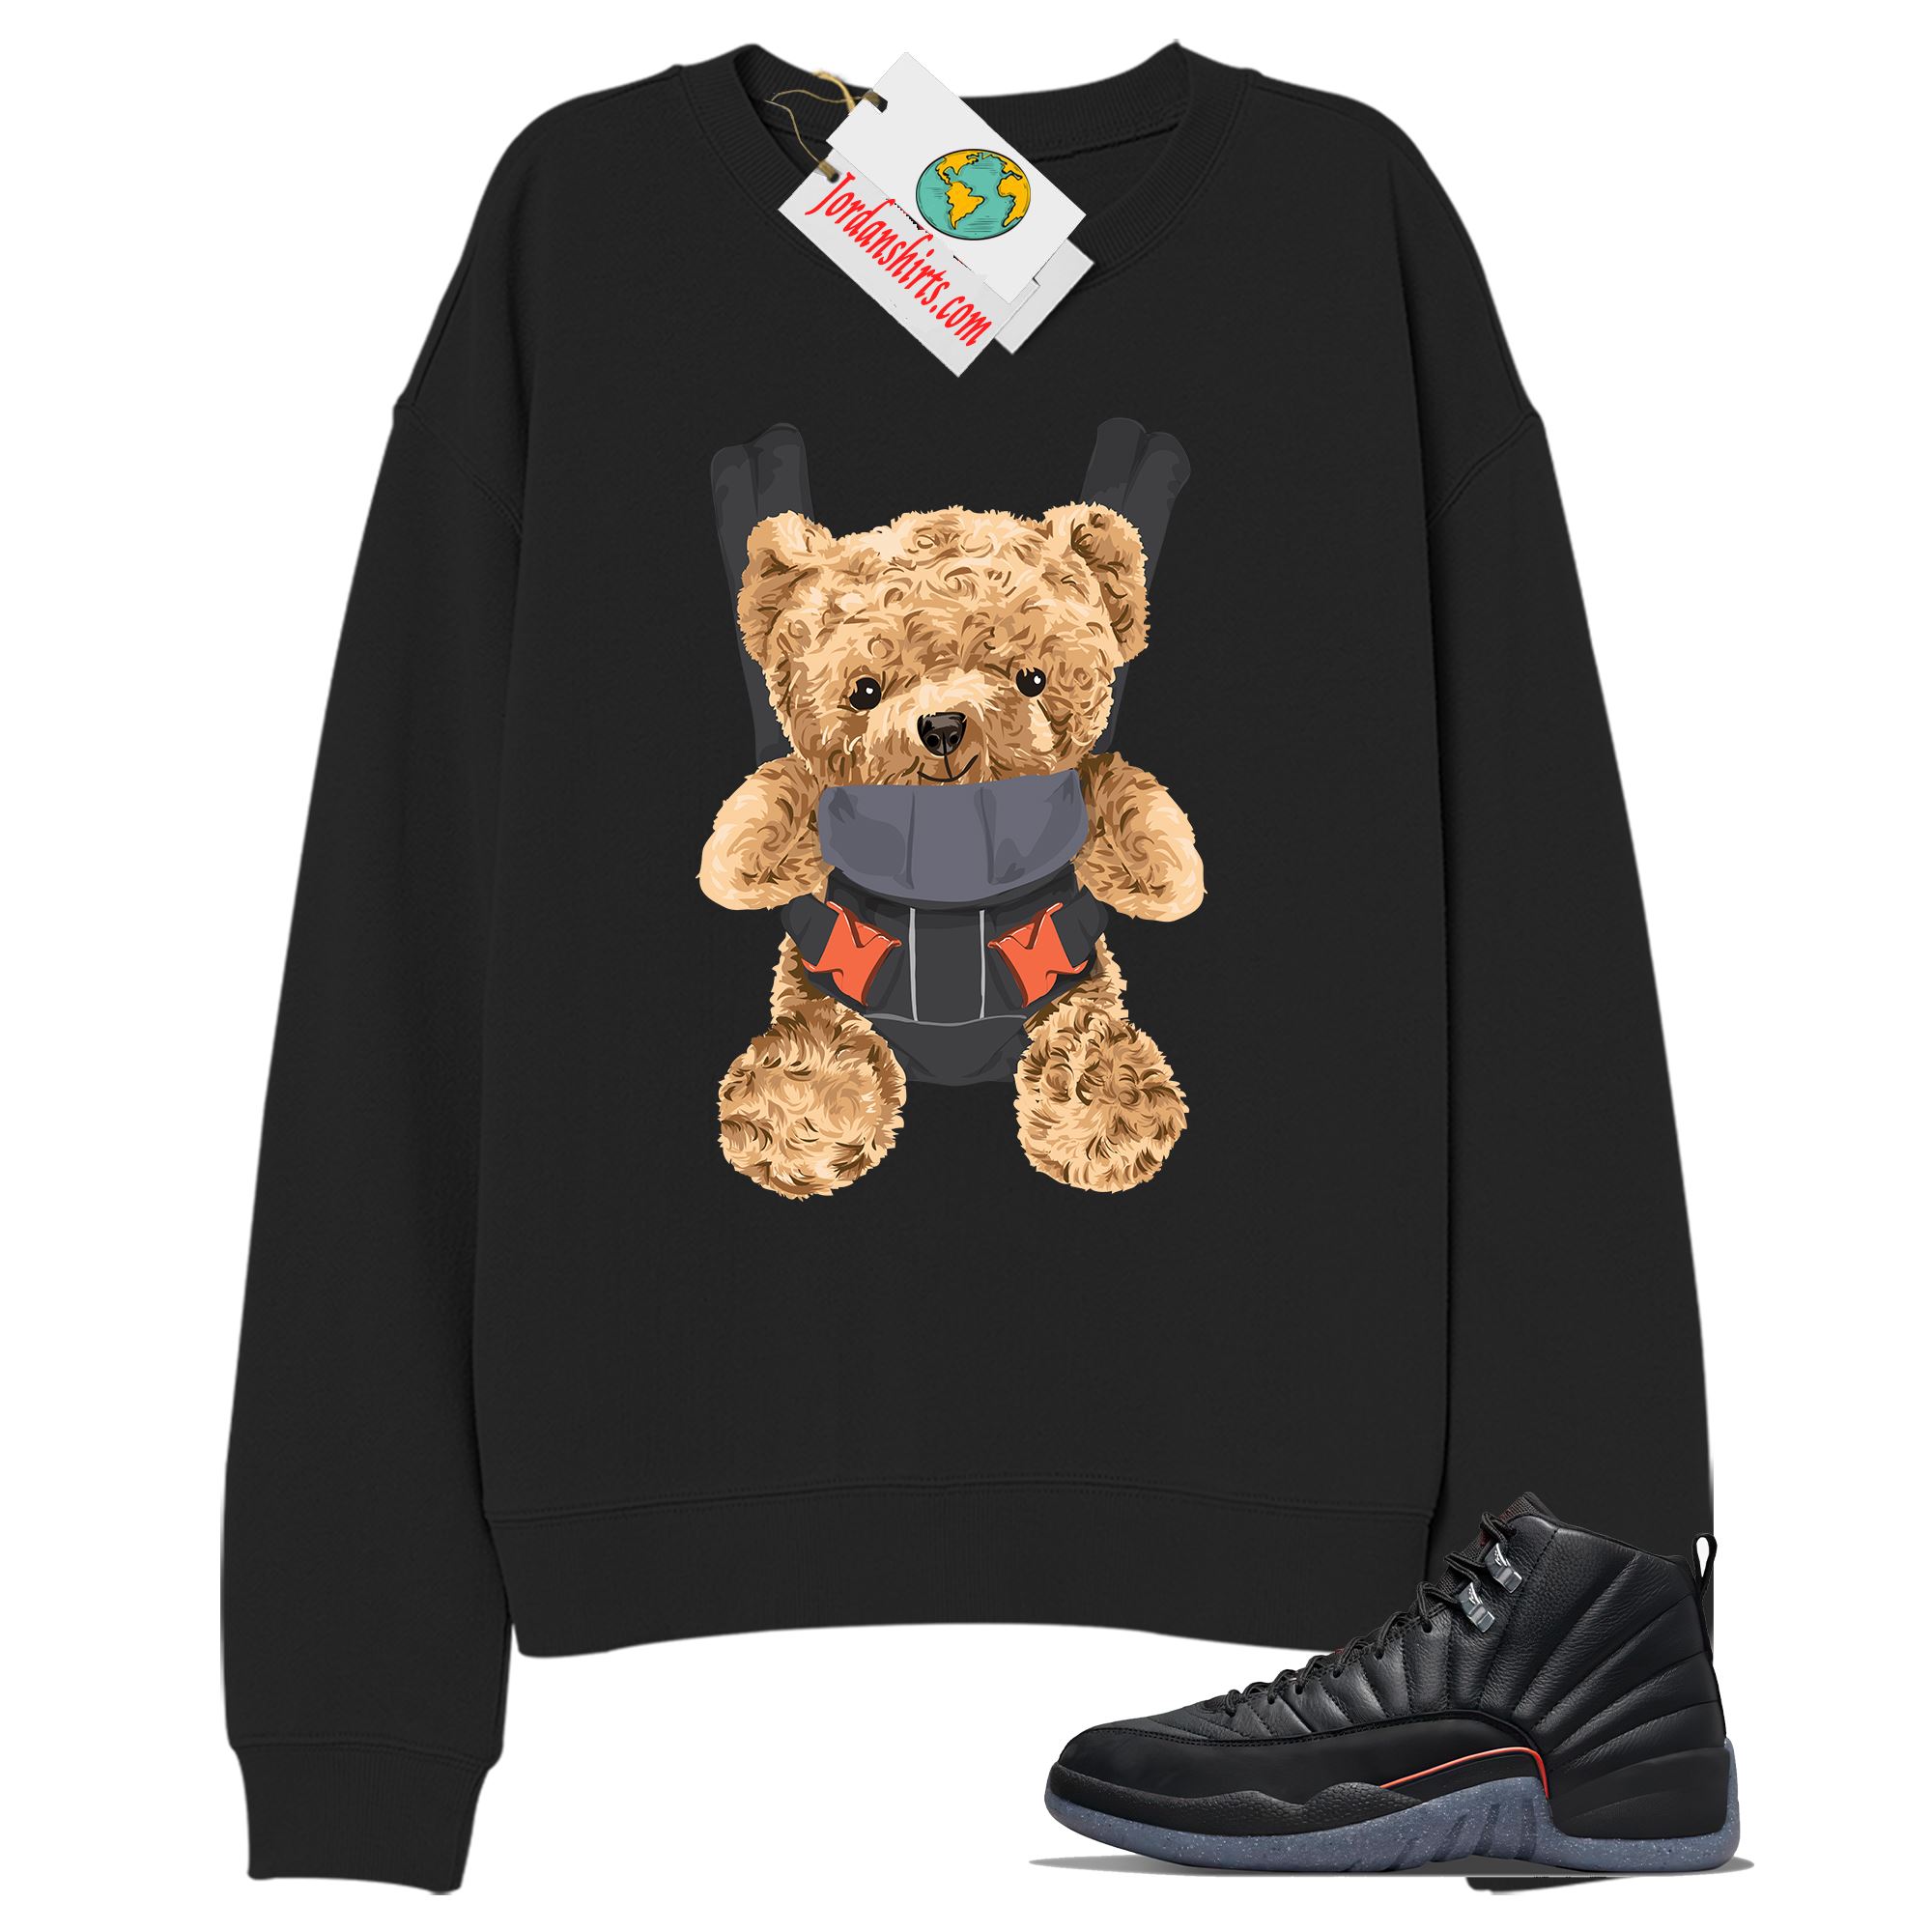 Jordan 12 Sweatshirt, Teddy Bear Bag Black Sweatshirt Air Jordan 12 Utility Grind 12s Full Size Up To 5xl